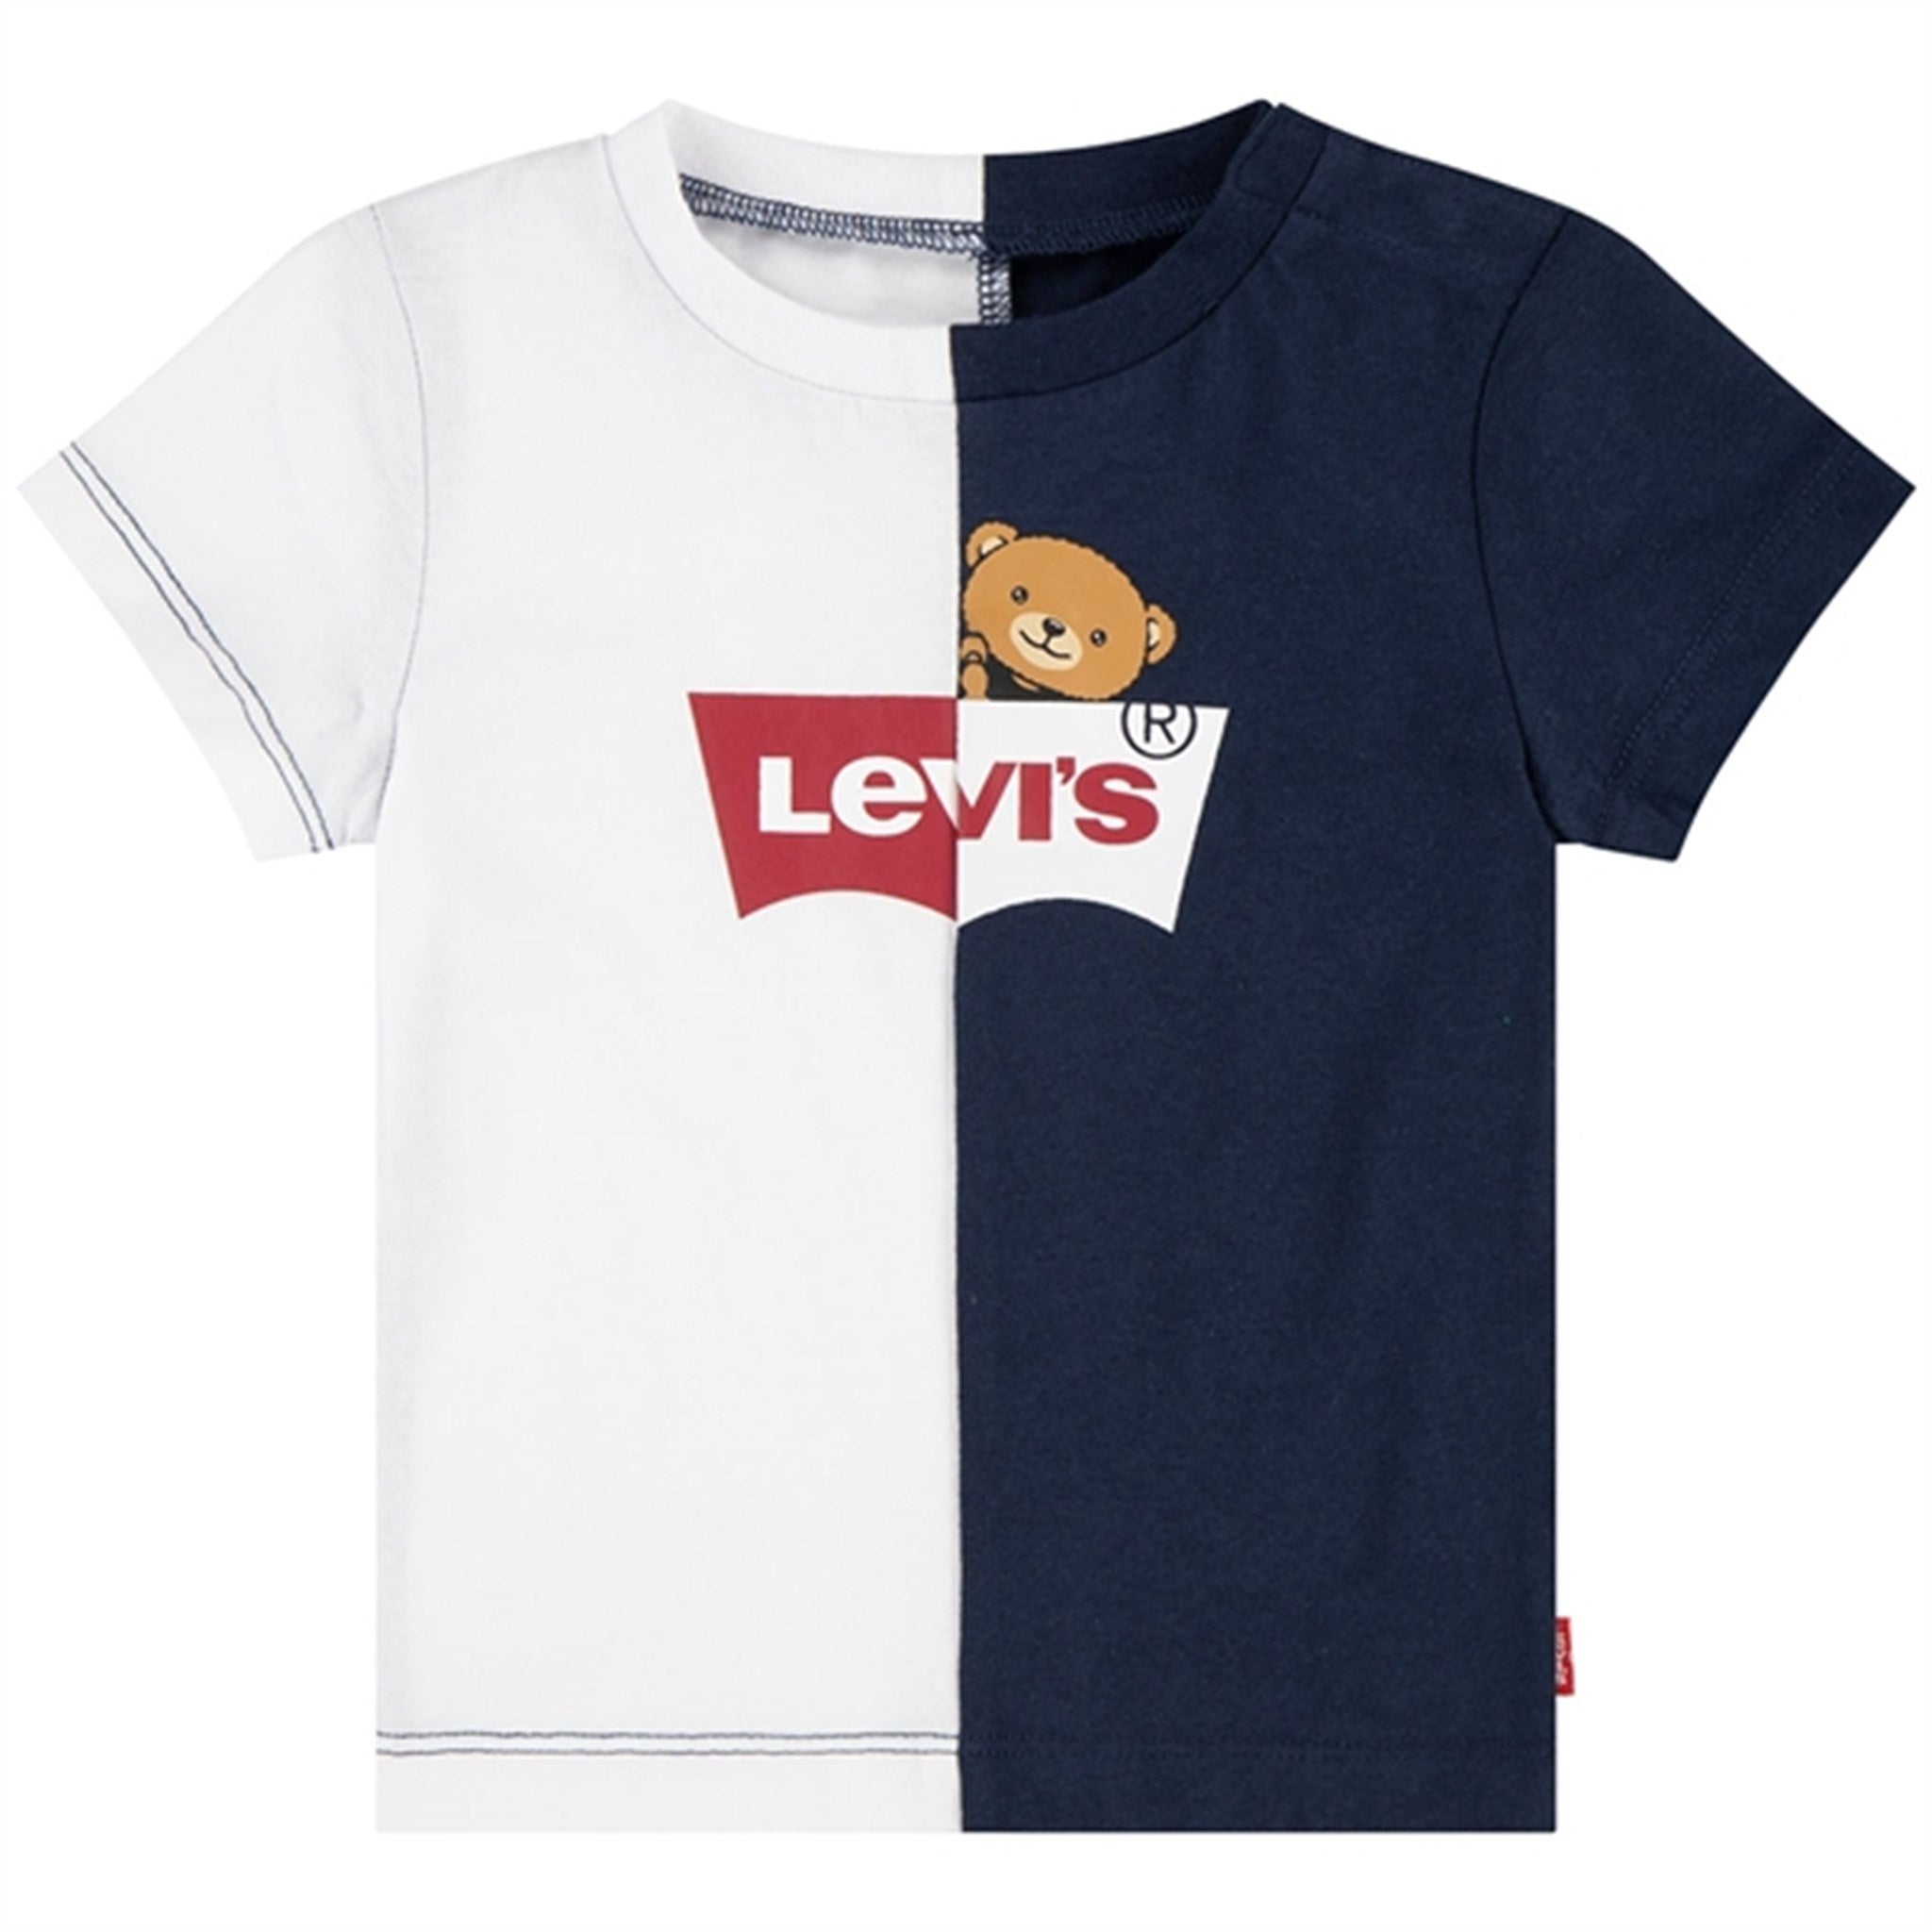 Levi's Baby Spliced Graphic T-Shirt Dress Blues